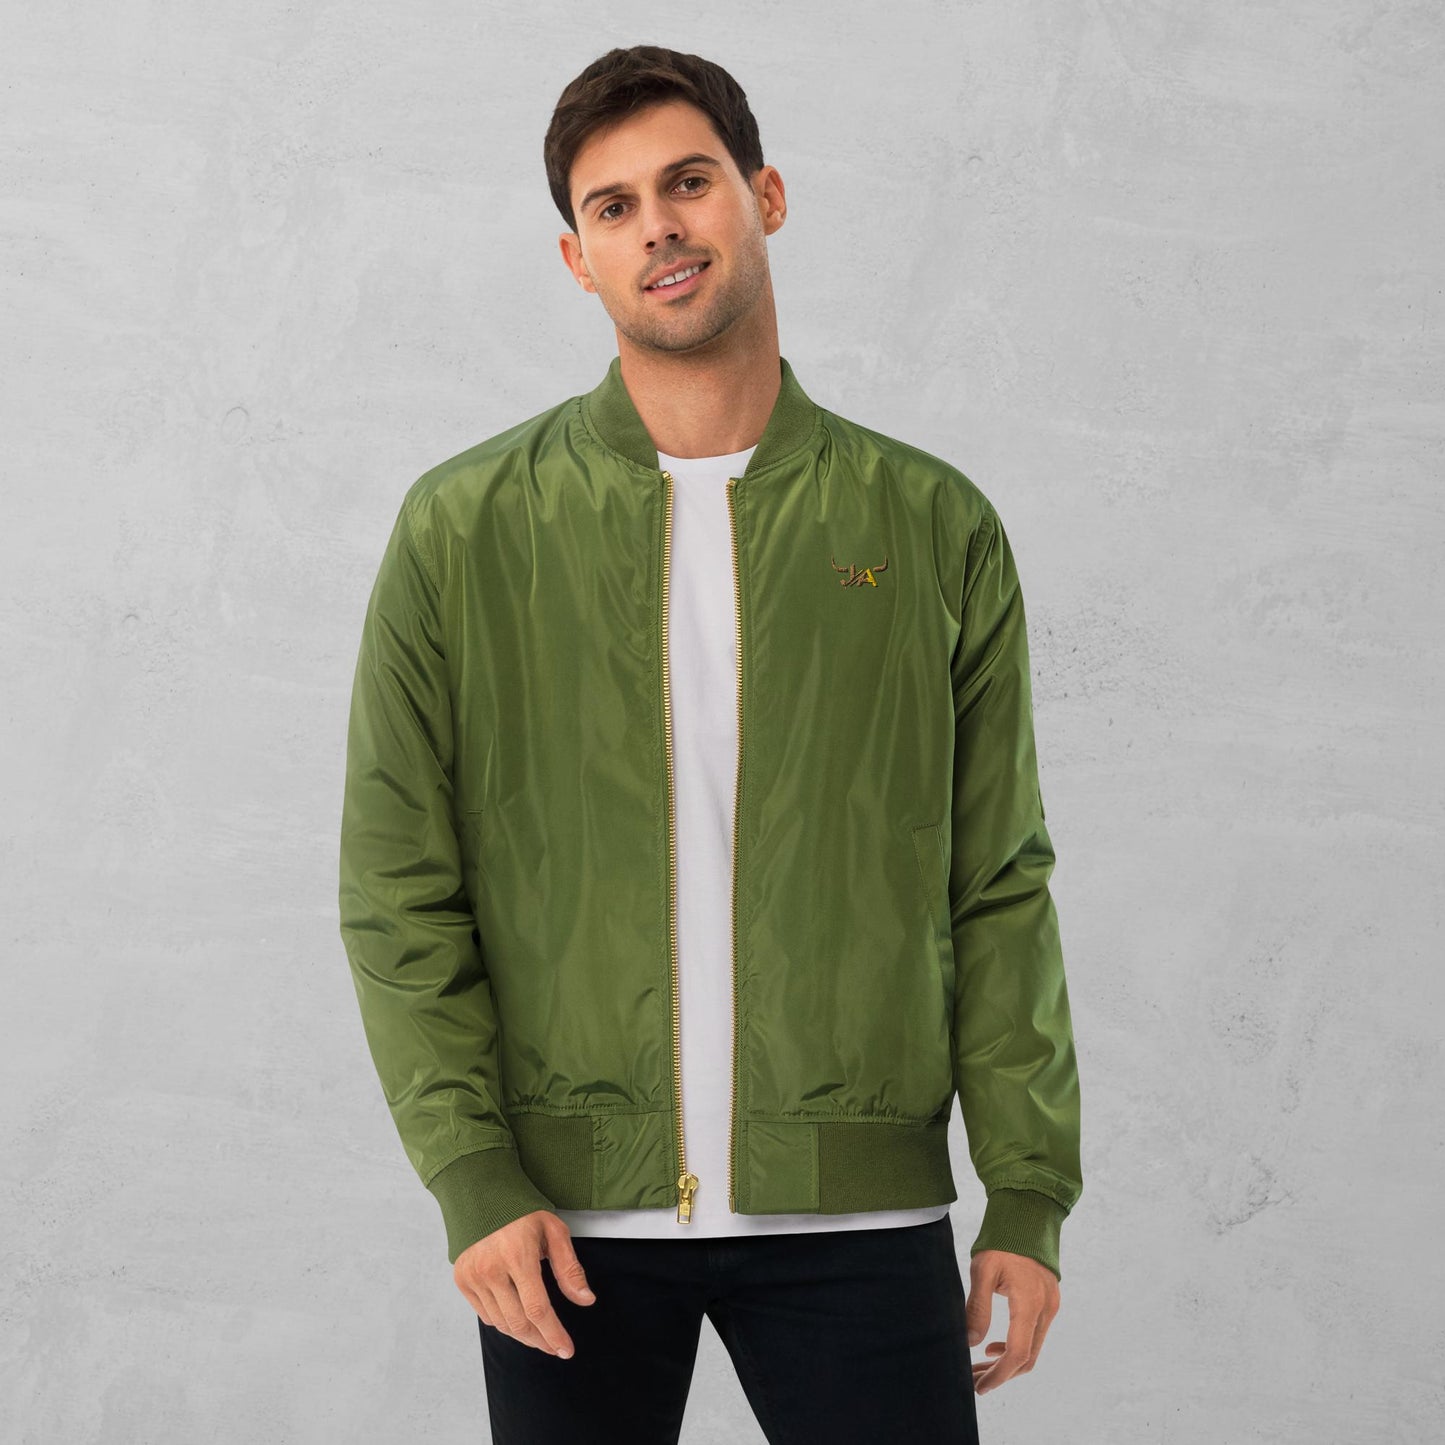 J.A Men's Premium recycled bomber jacket